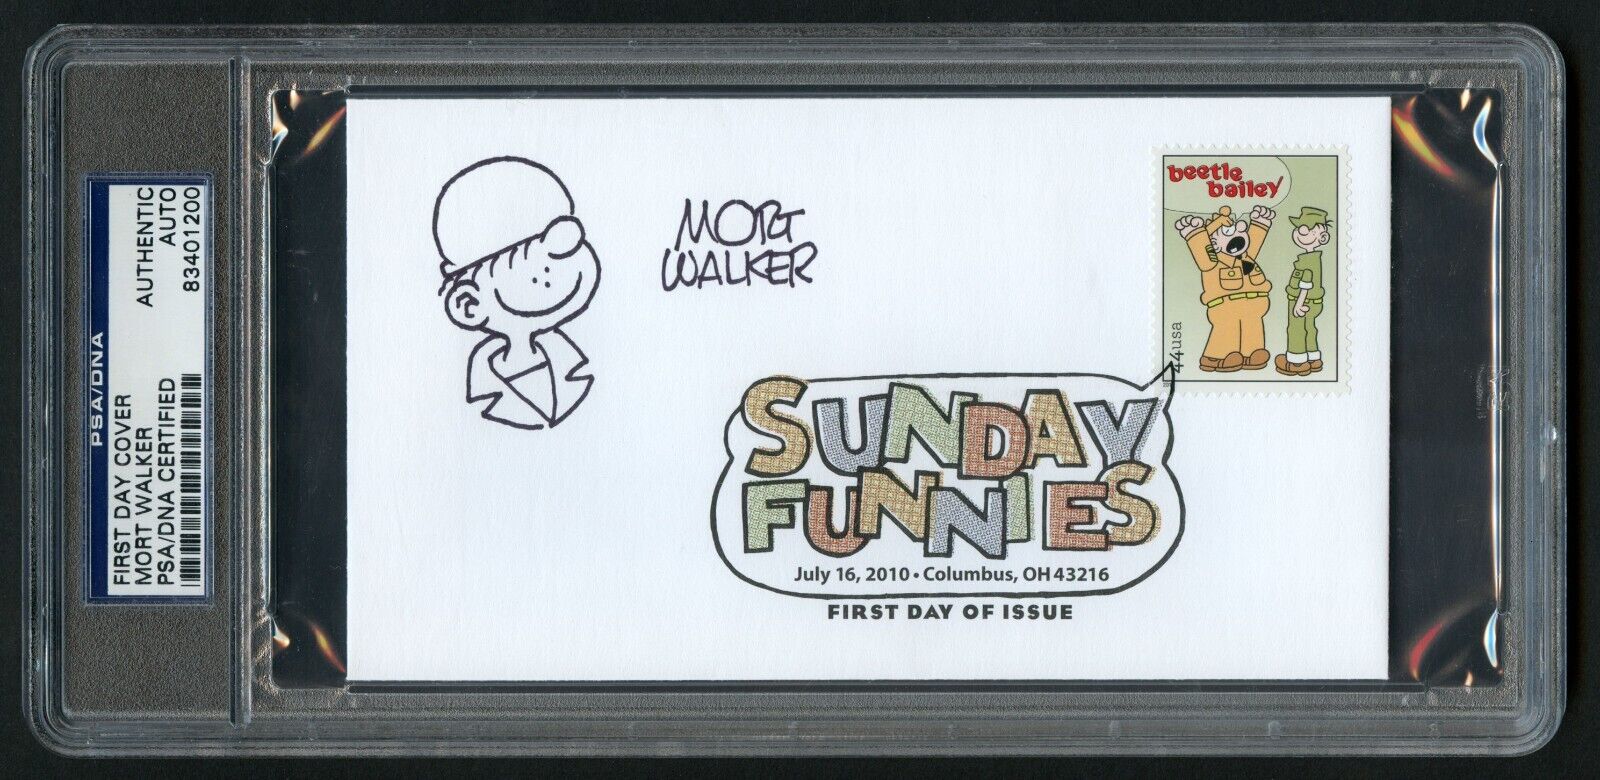 Mort Walker signed autograph Postal Cover w/ Original Beetle Bailey Sketch PSA